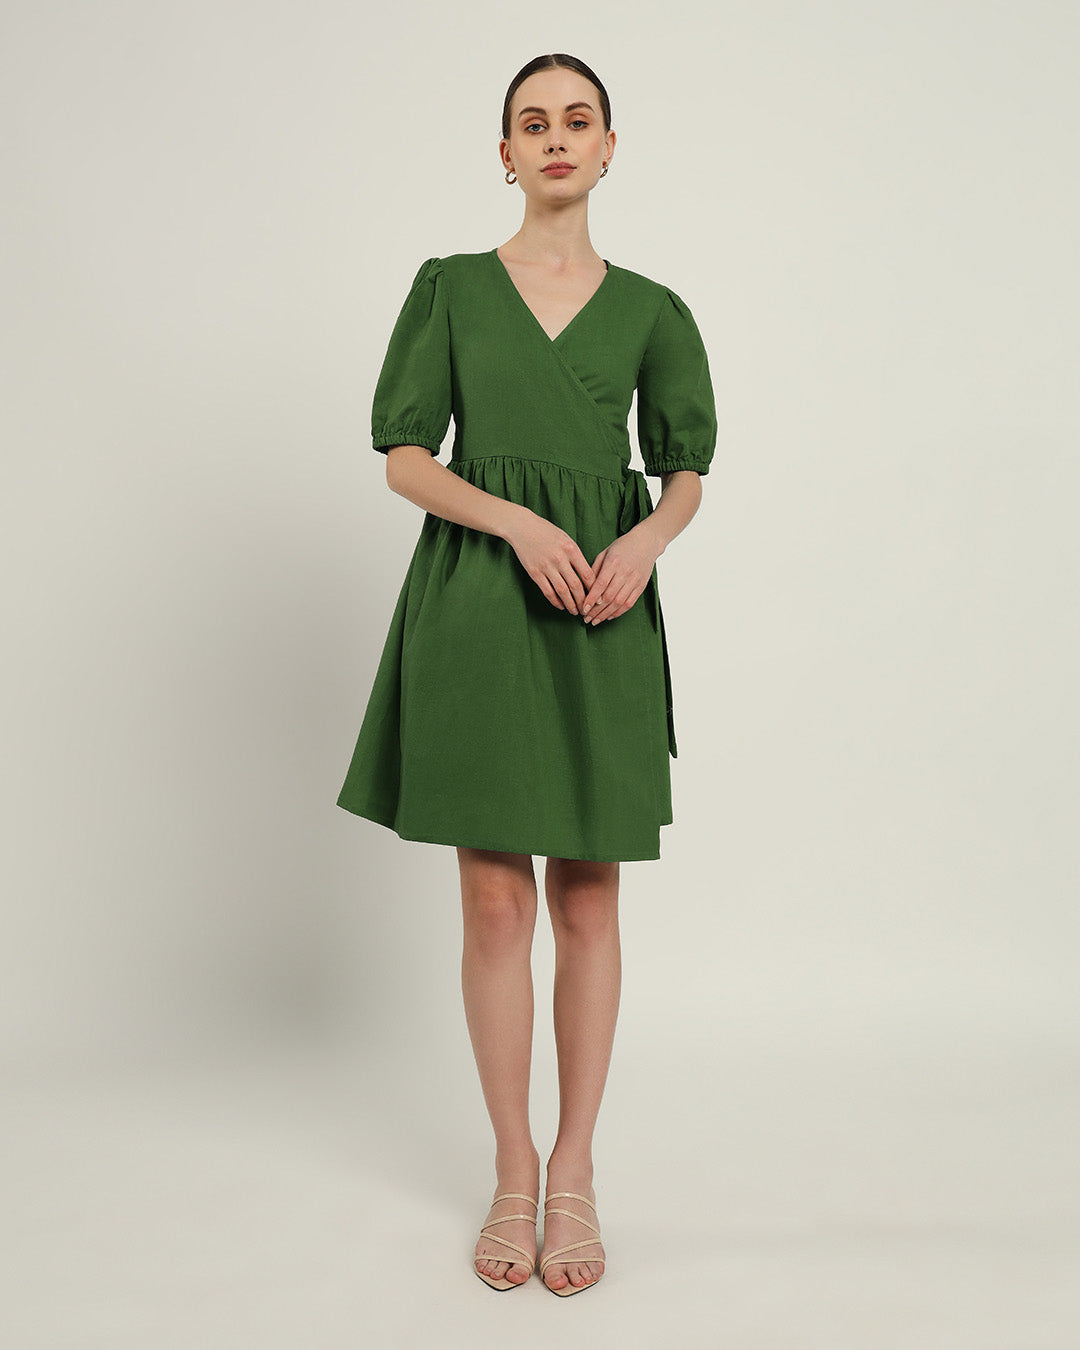 The Inzai Emerald Dress